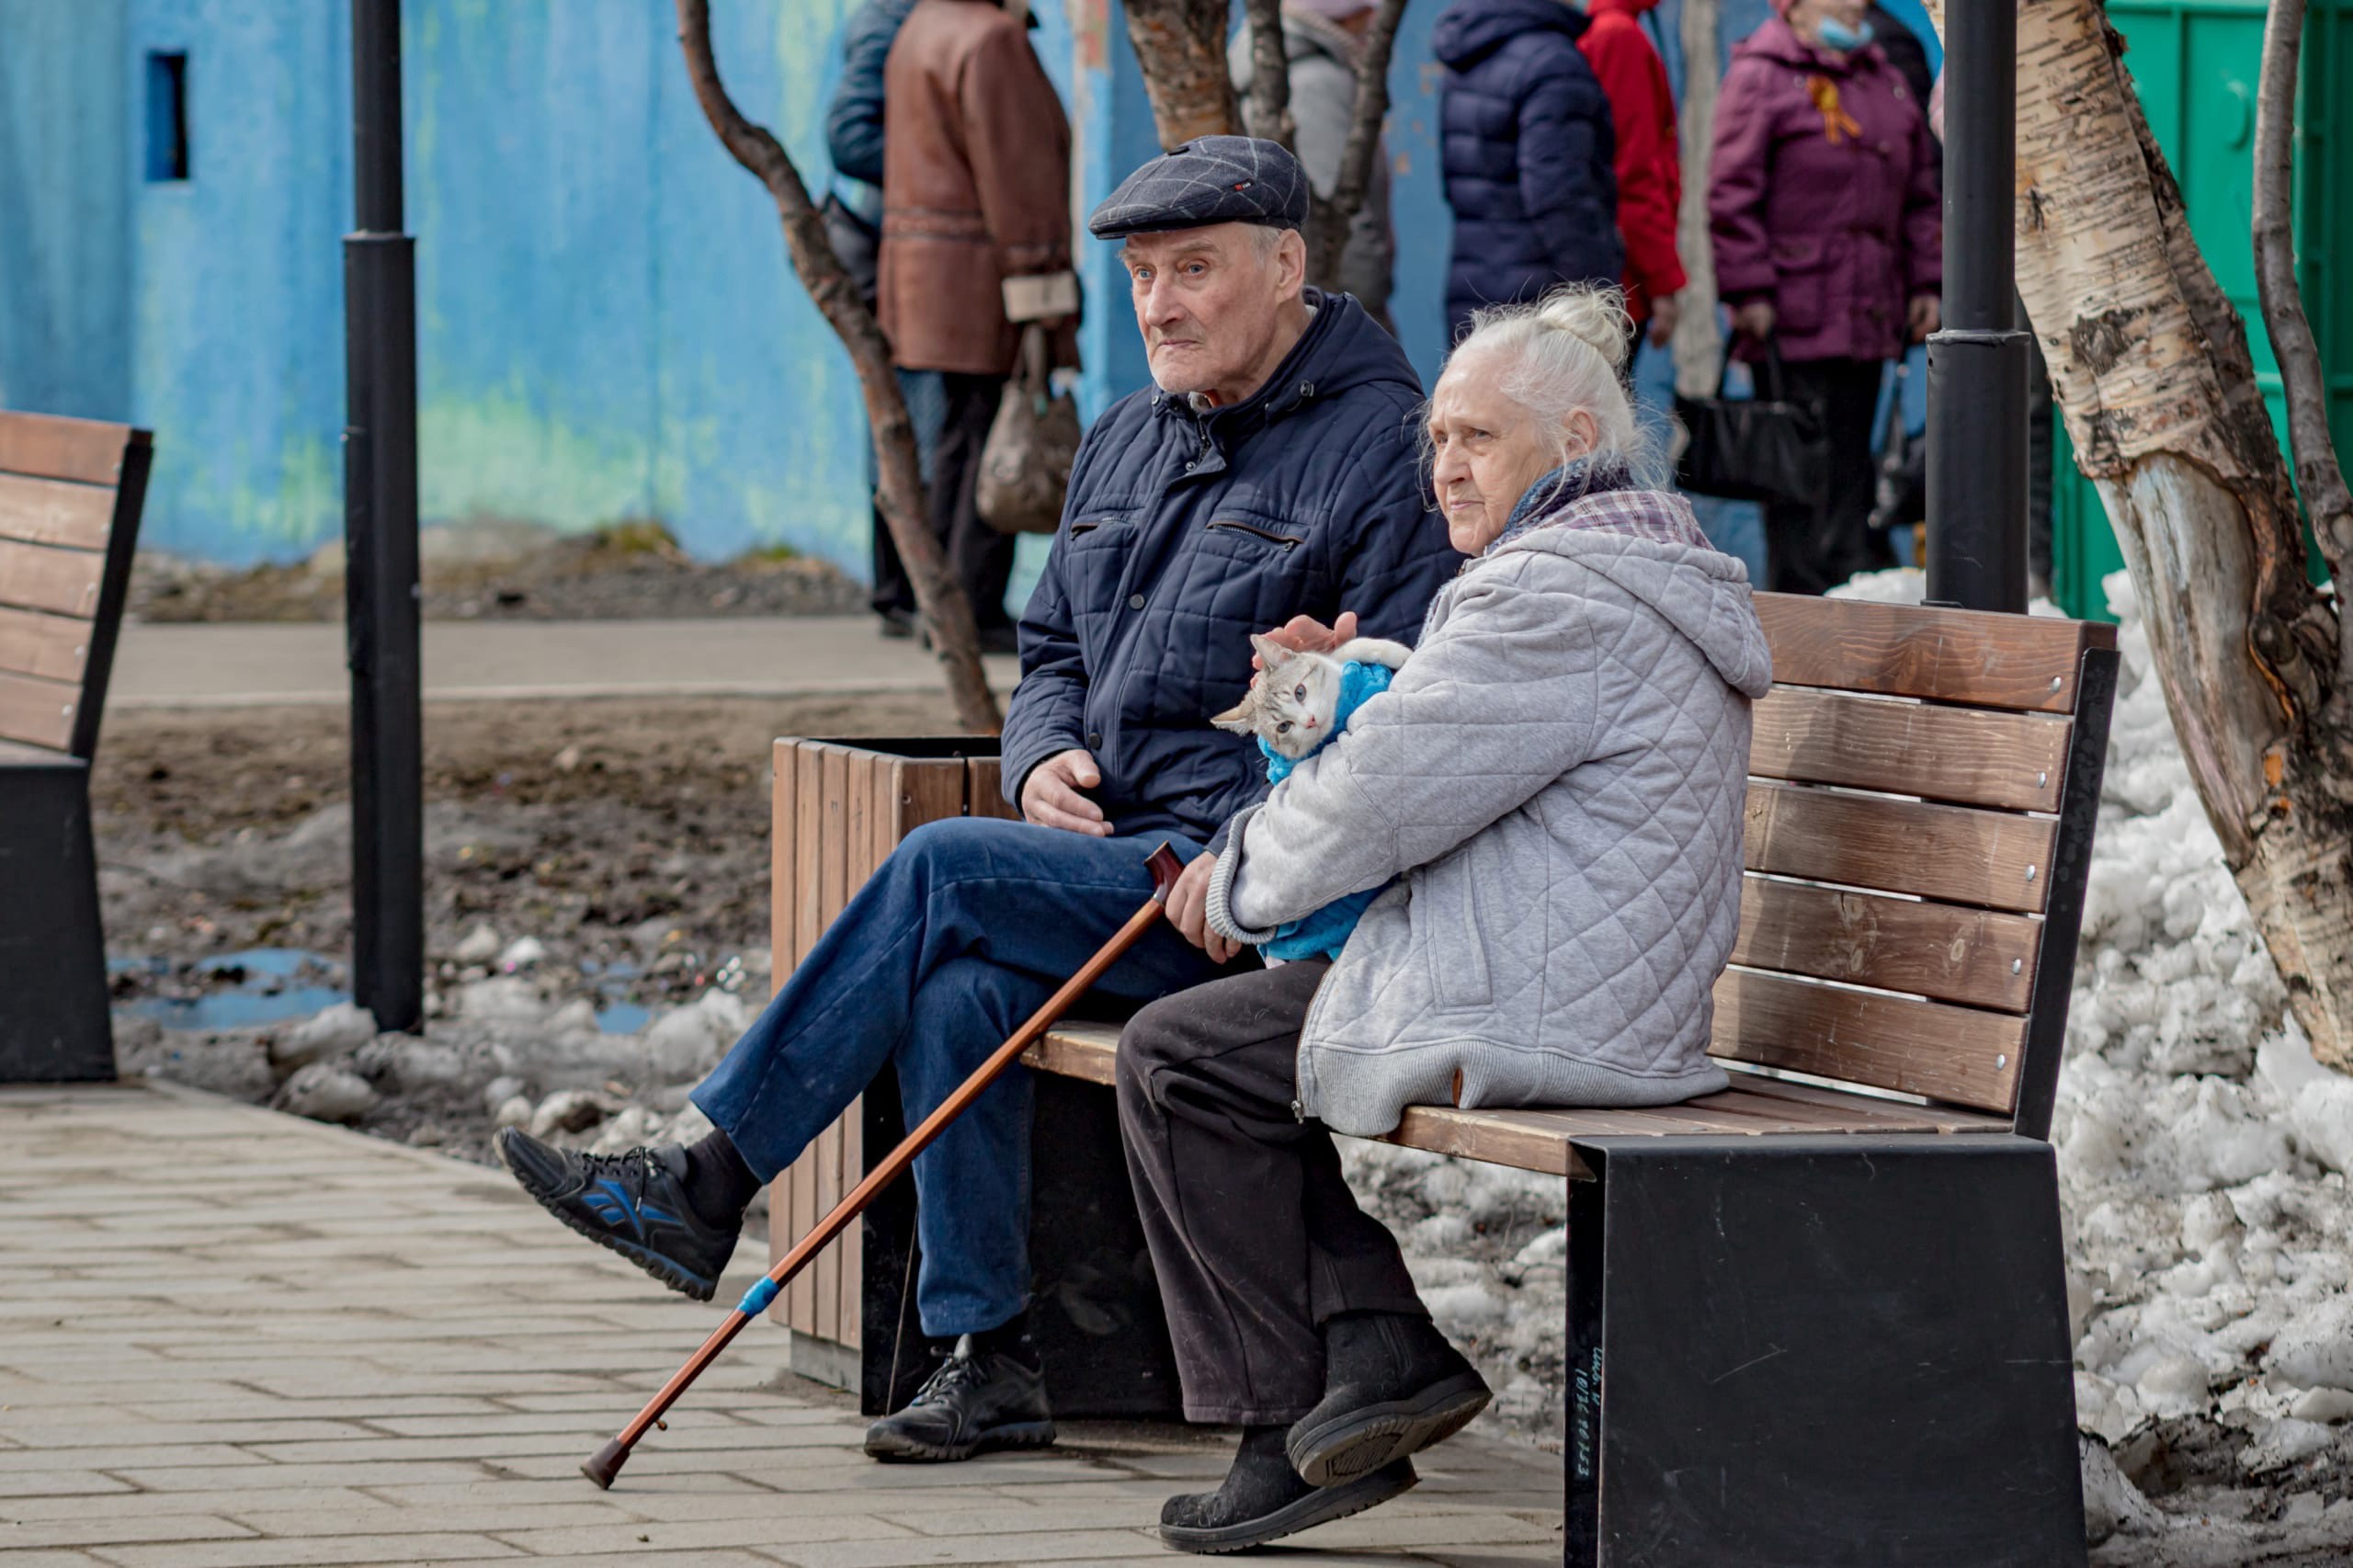 Пенсионер крайнего севера. Пенсионеры в России. Российские пенсионеры. Бедные пенсионеры. Пенсионеры новый год.